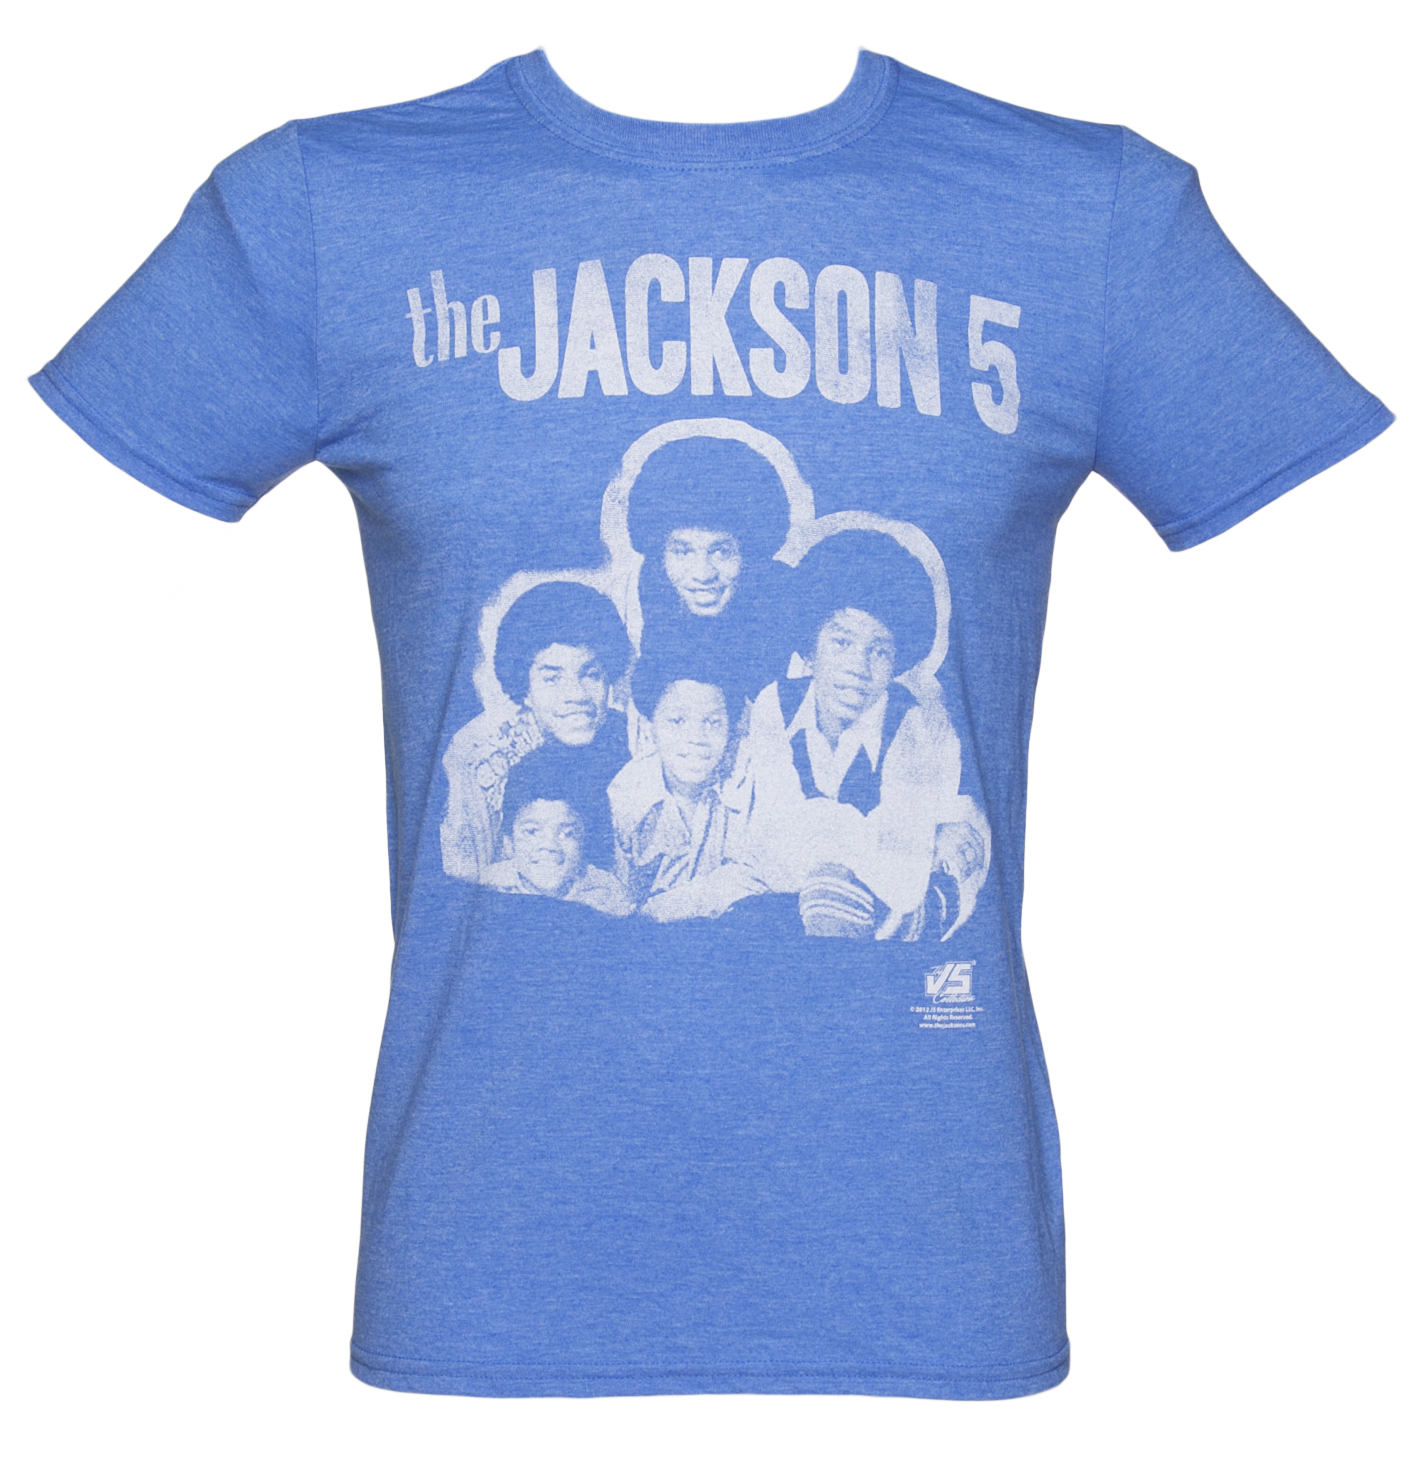 Mens Blue The Jackson 5 Group Photo T-Shirt